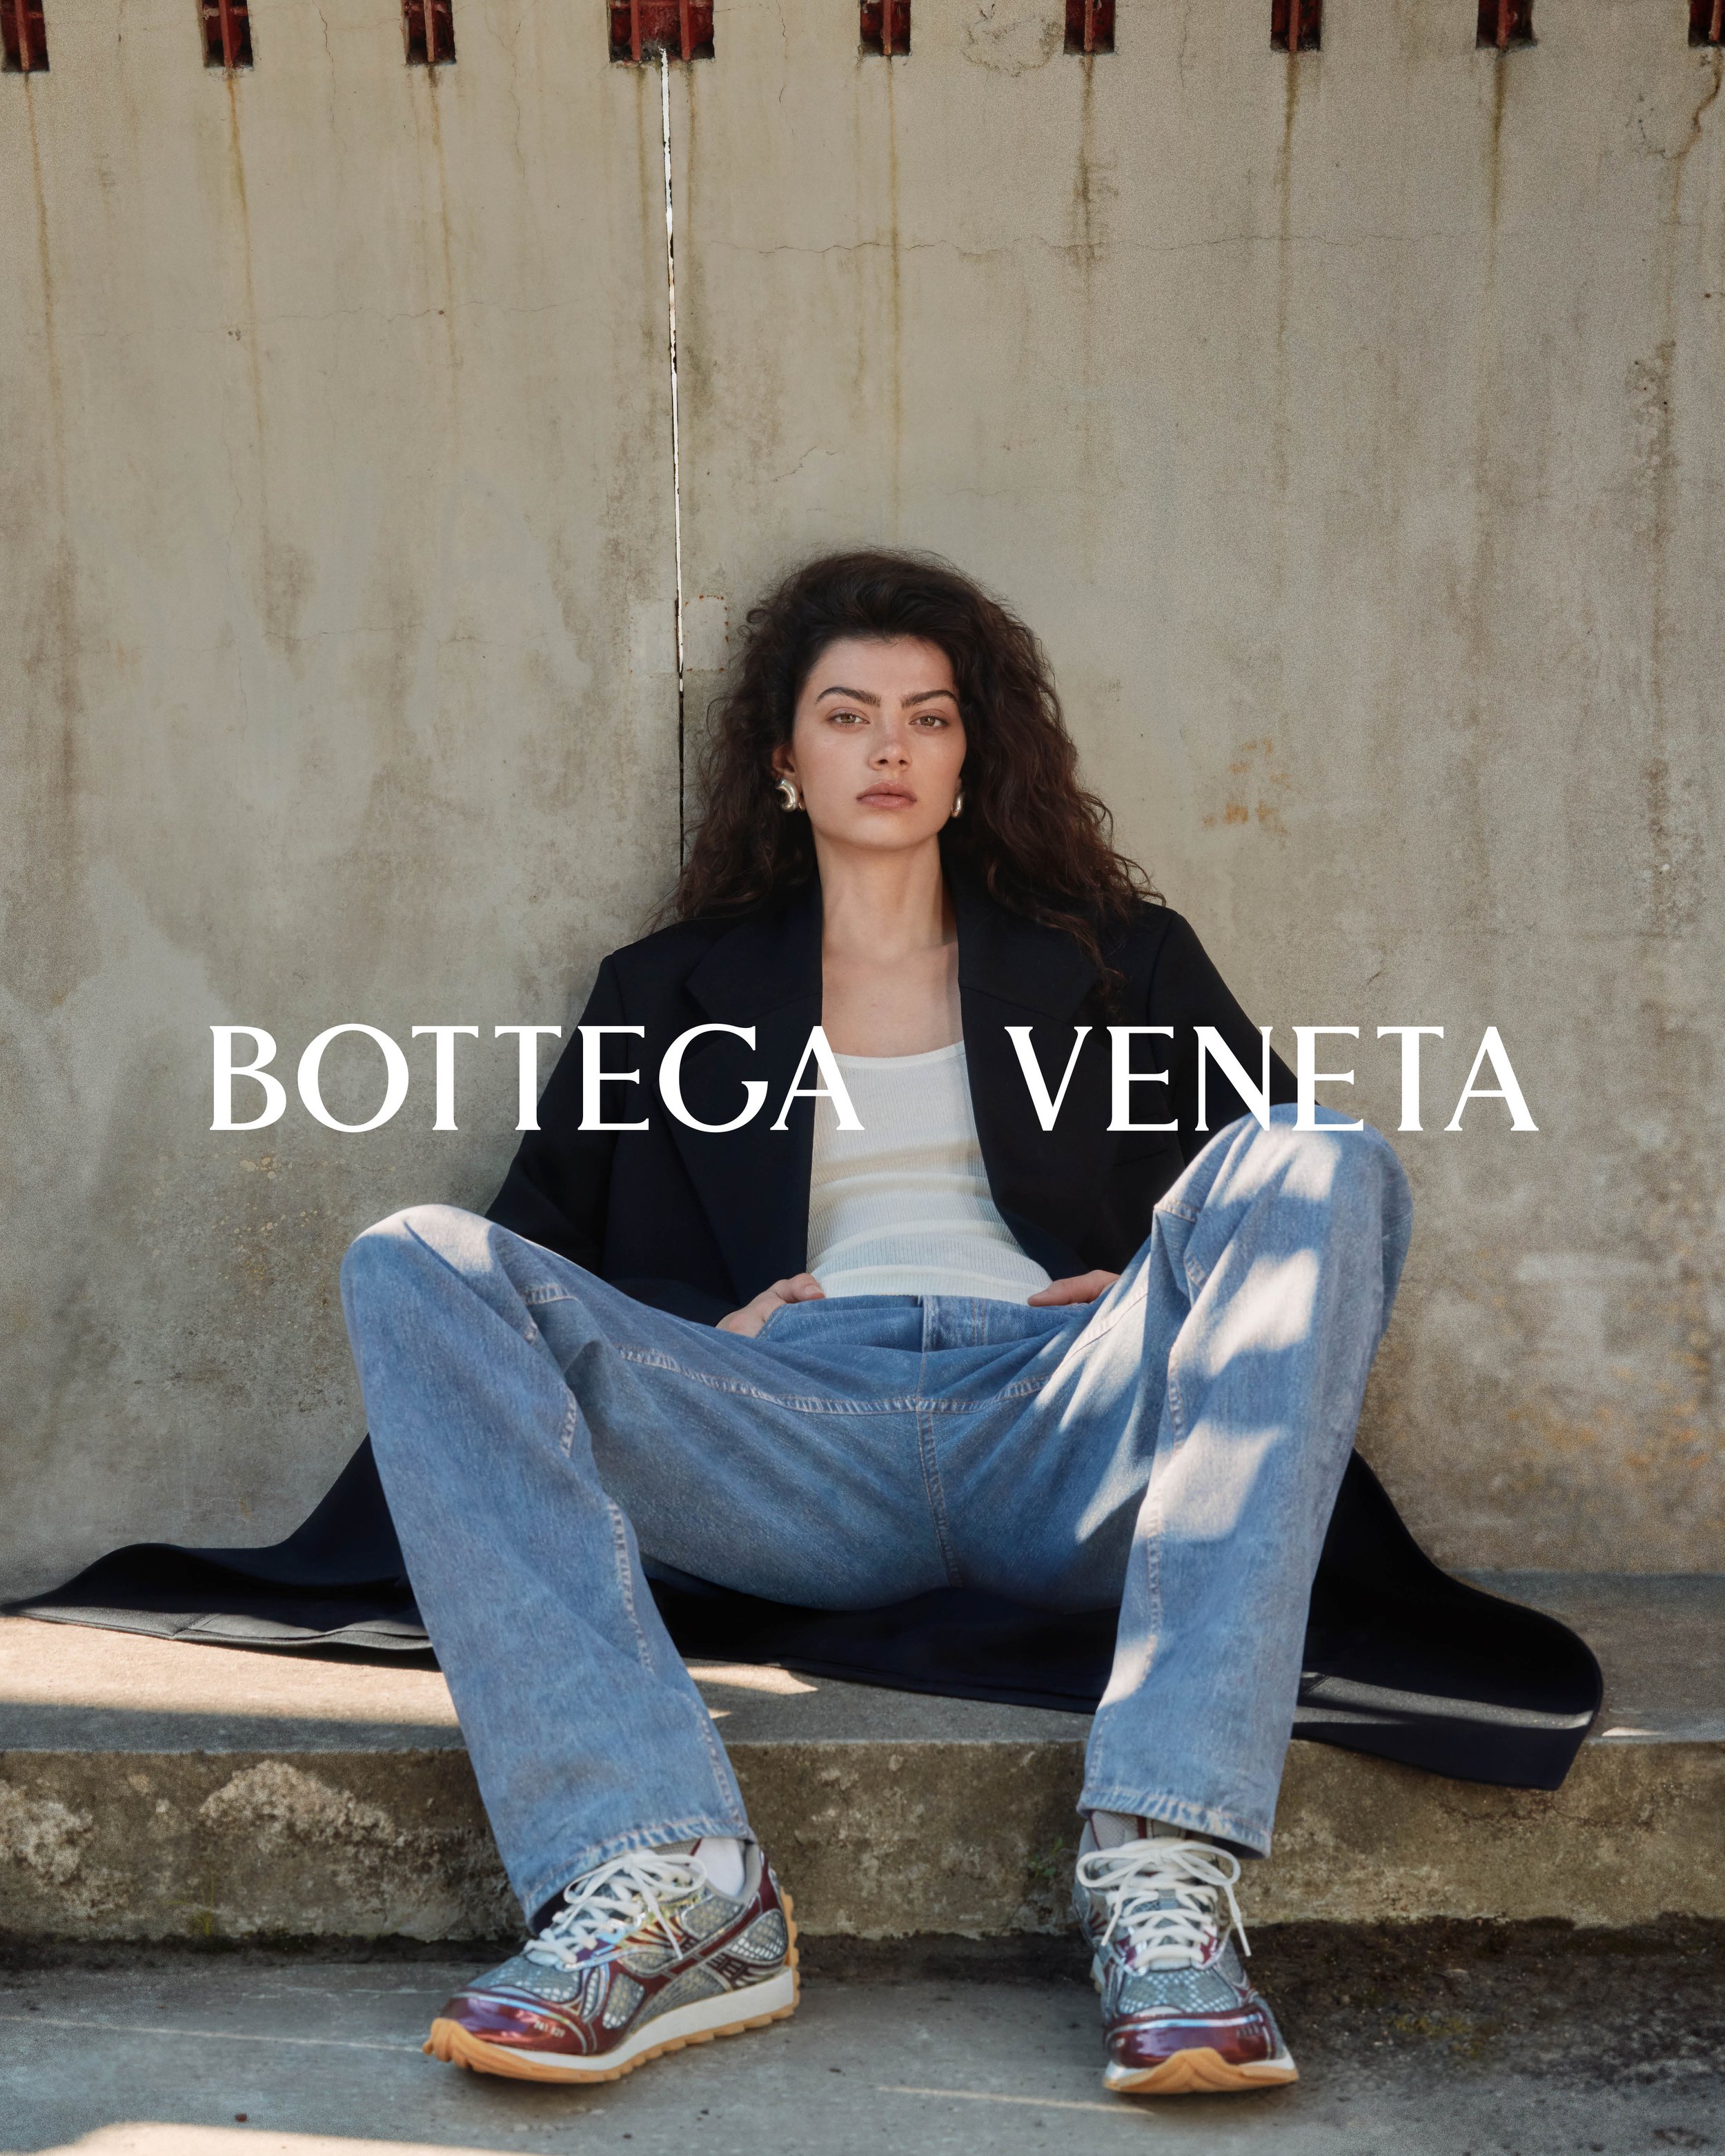 Bottega Veneta new standard of luxury - Form Follows Fashion